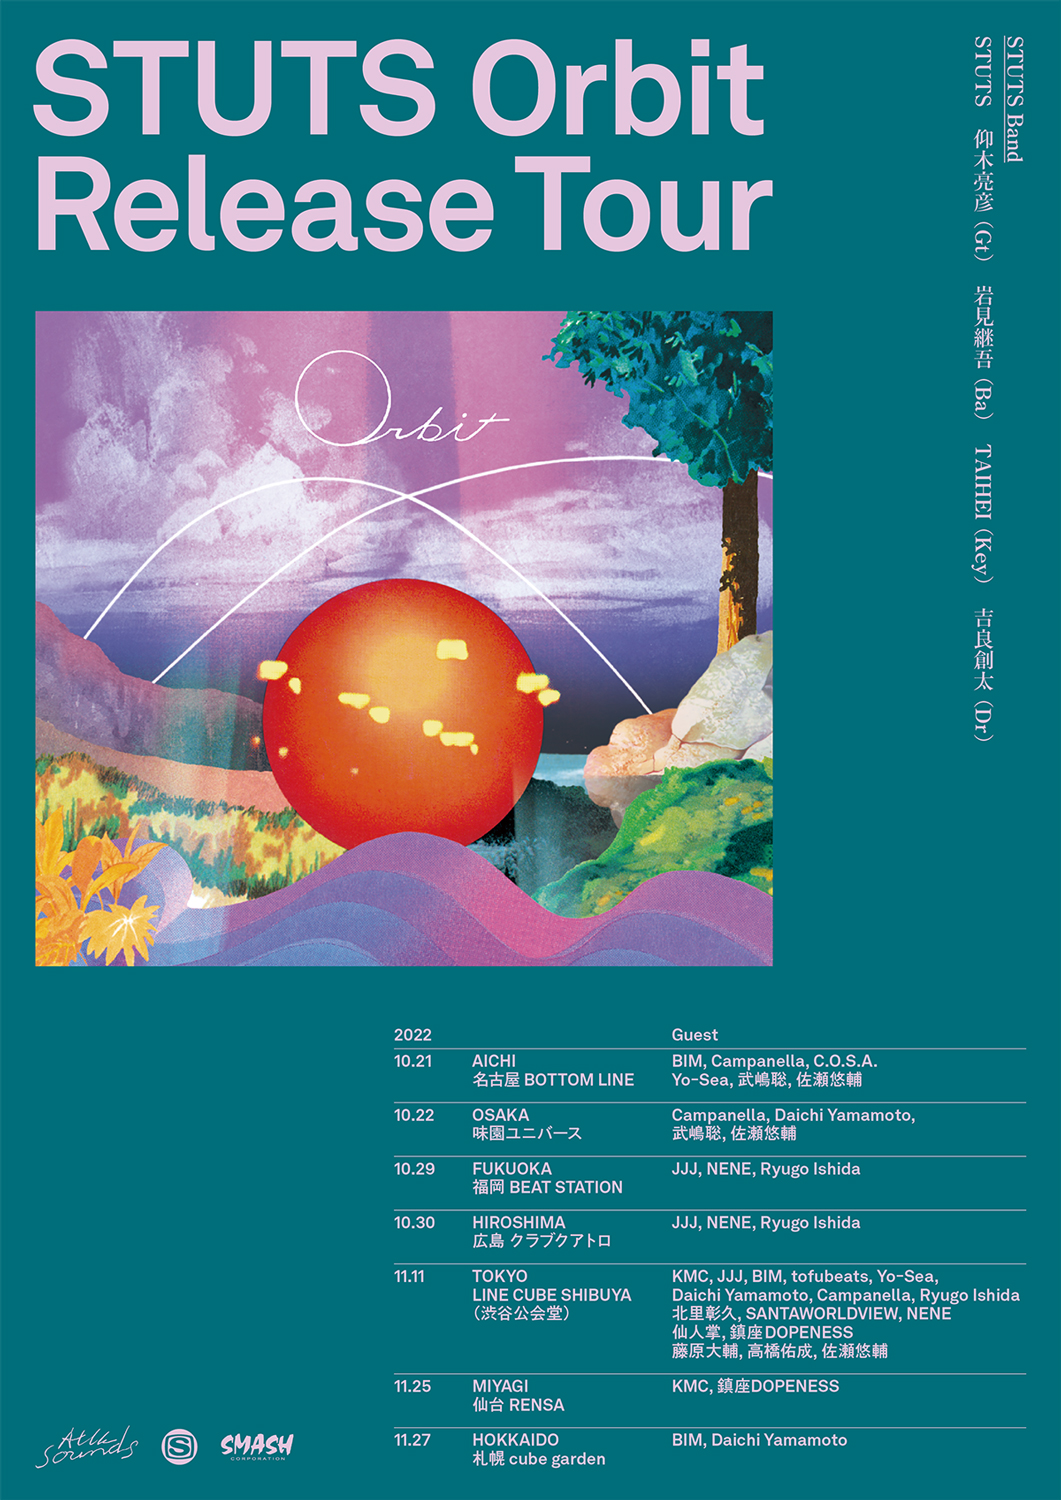 「STUTS 『Orbit』Release Tour」